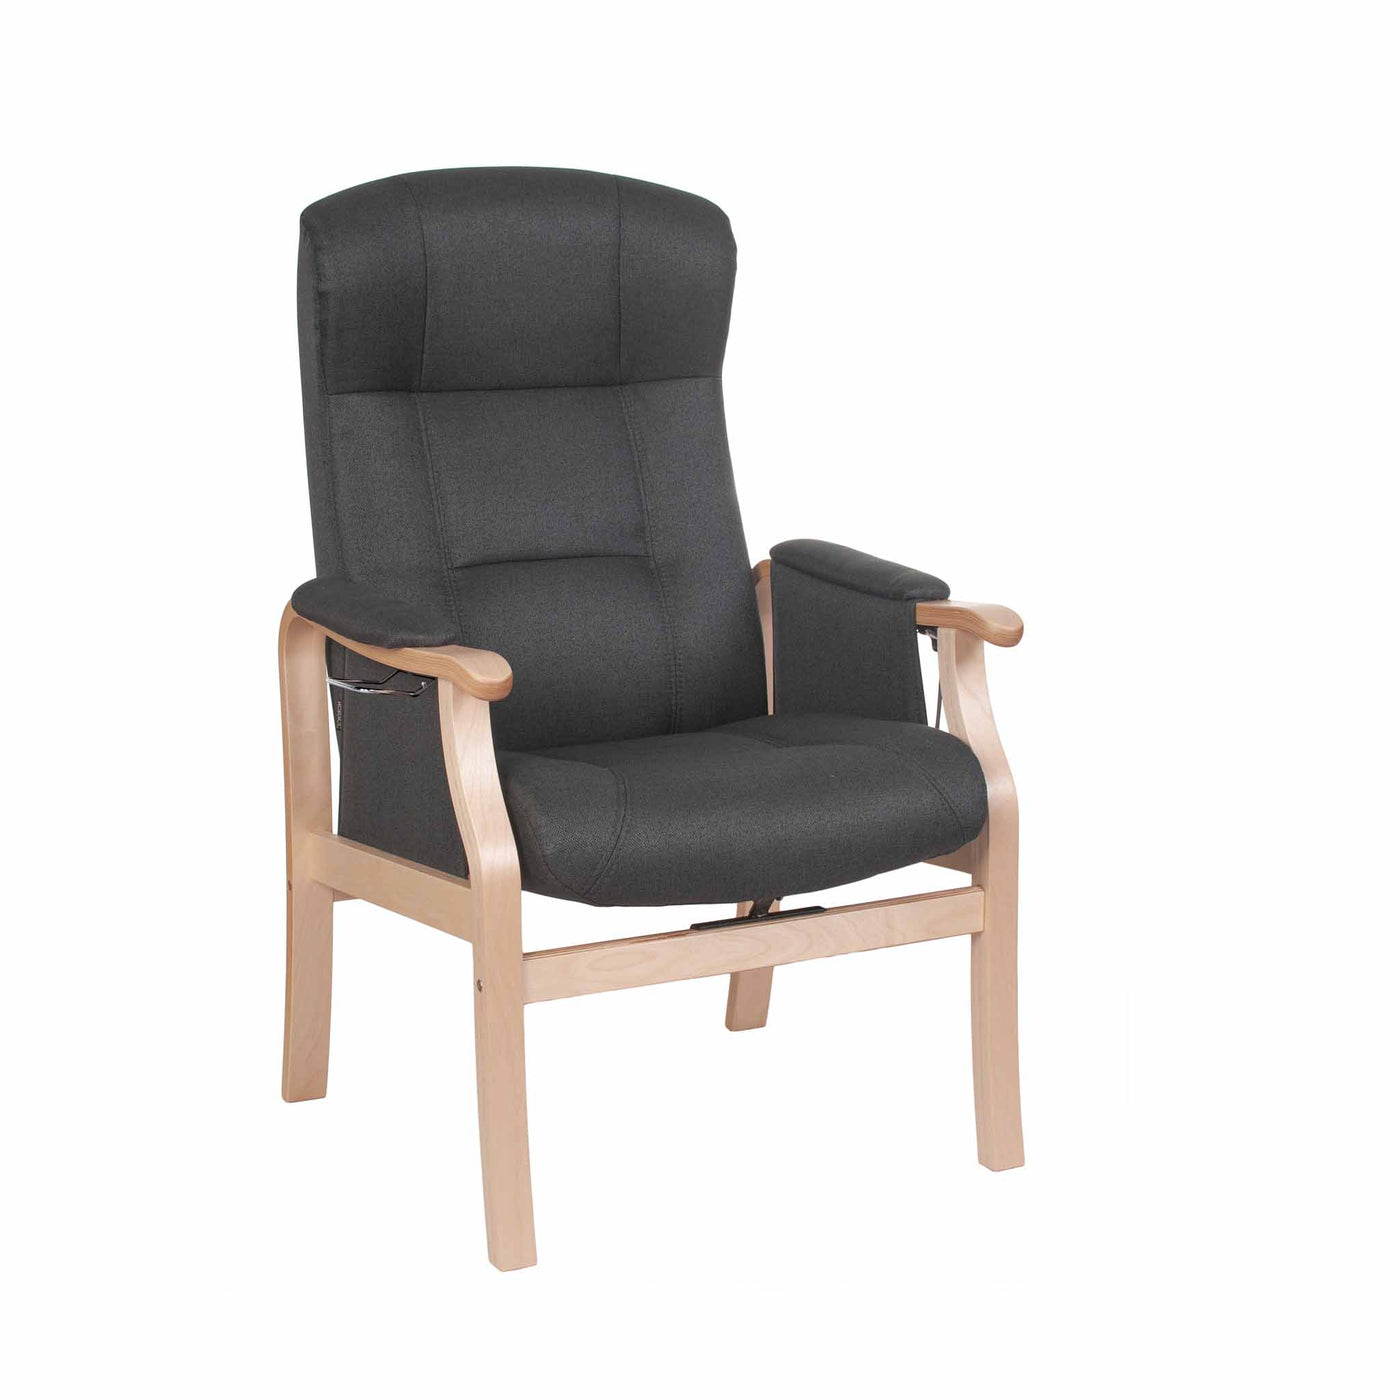 Sorø Plus Otium lænestol med skammel i mørkegrå stof med ben i naturlakeret eg fra Nordic-C